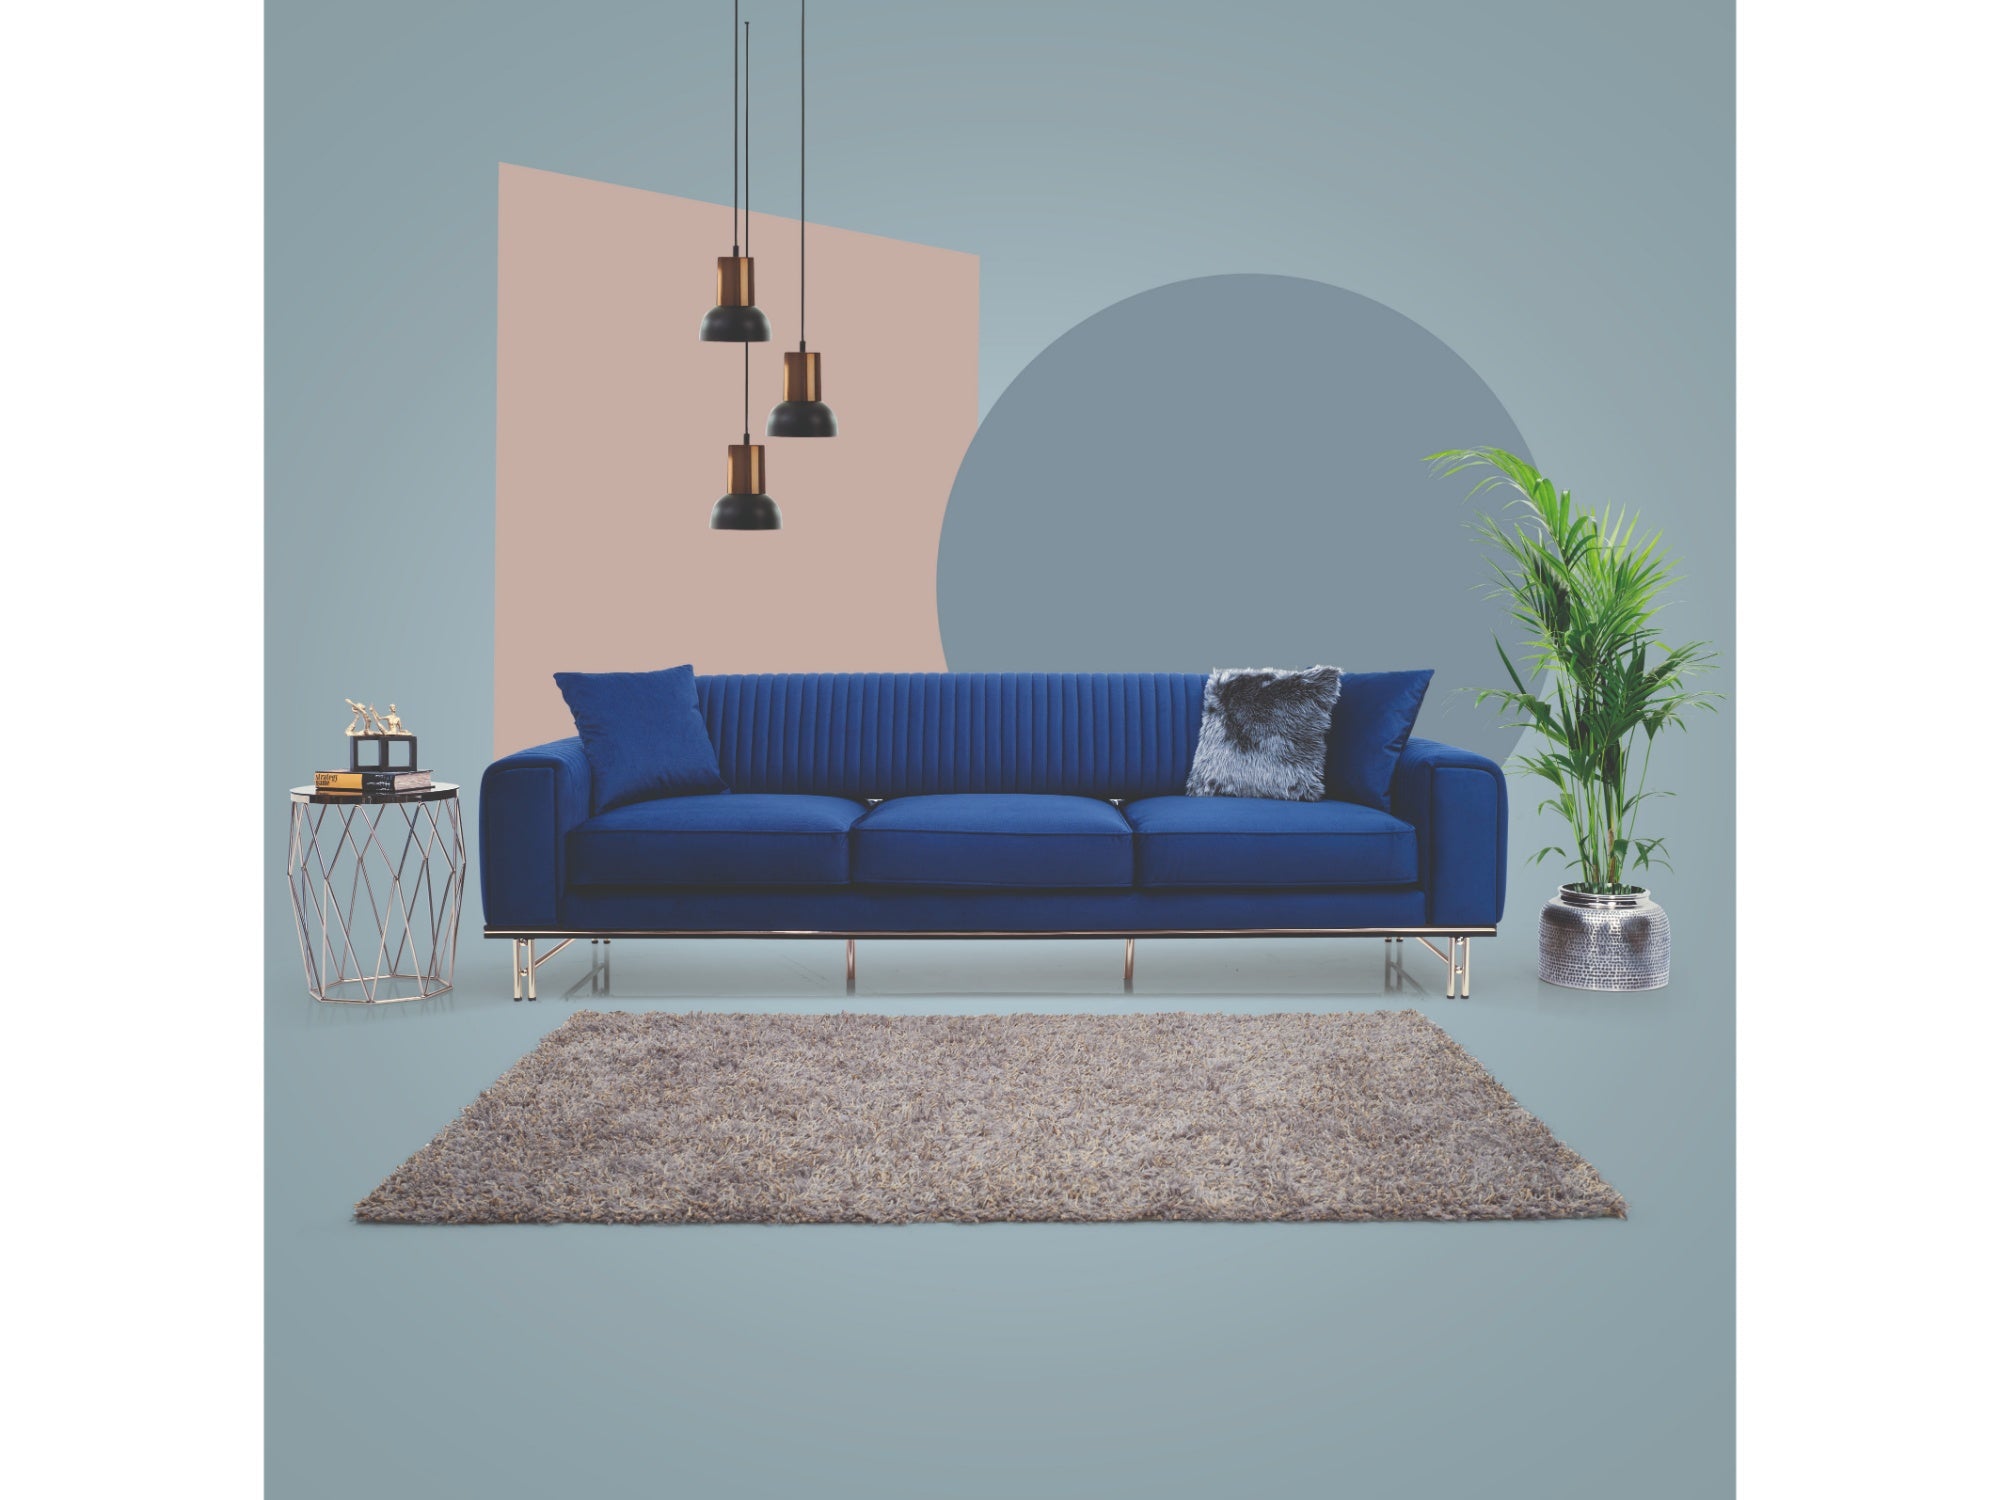 Verona Convertible Livingroom Set (2 Sofa & 2 Chair)